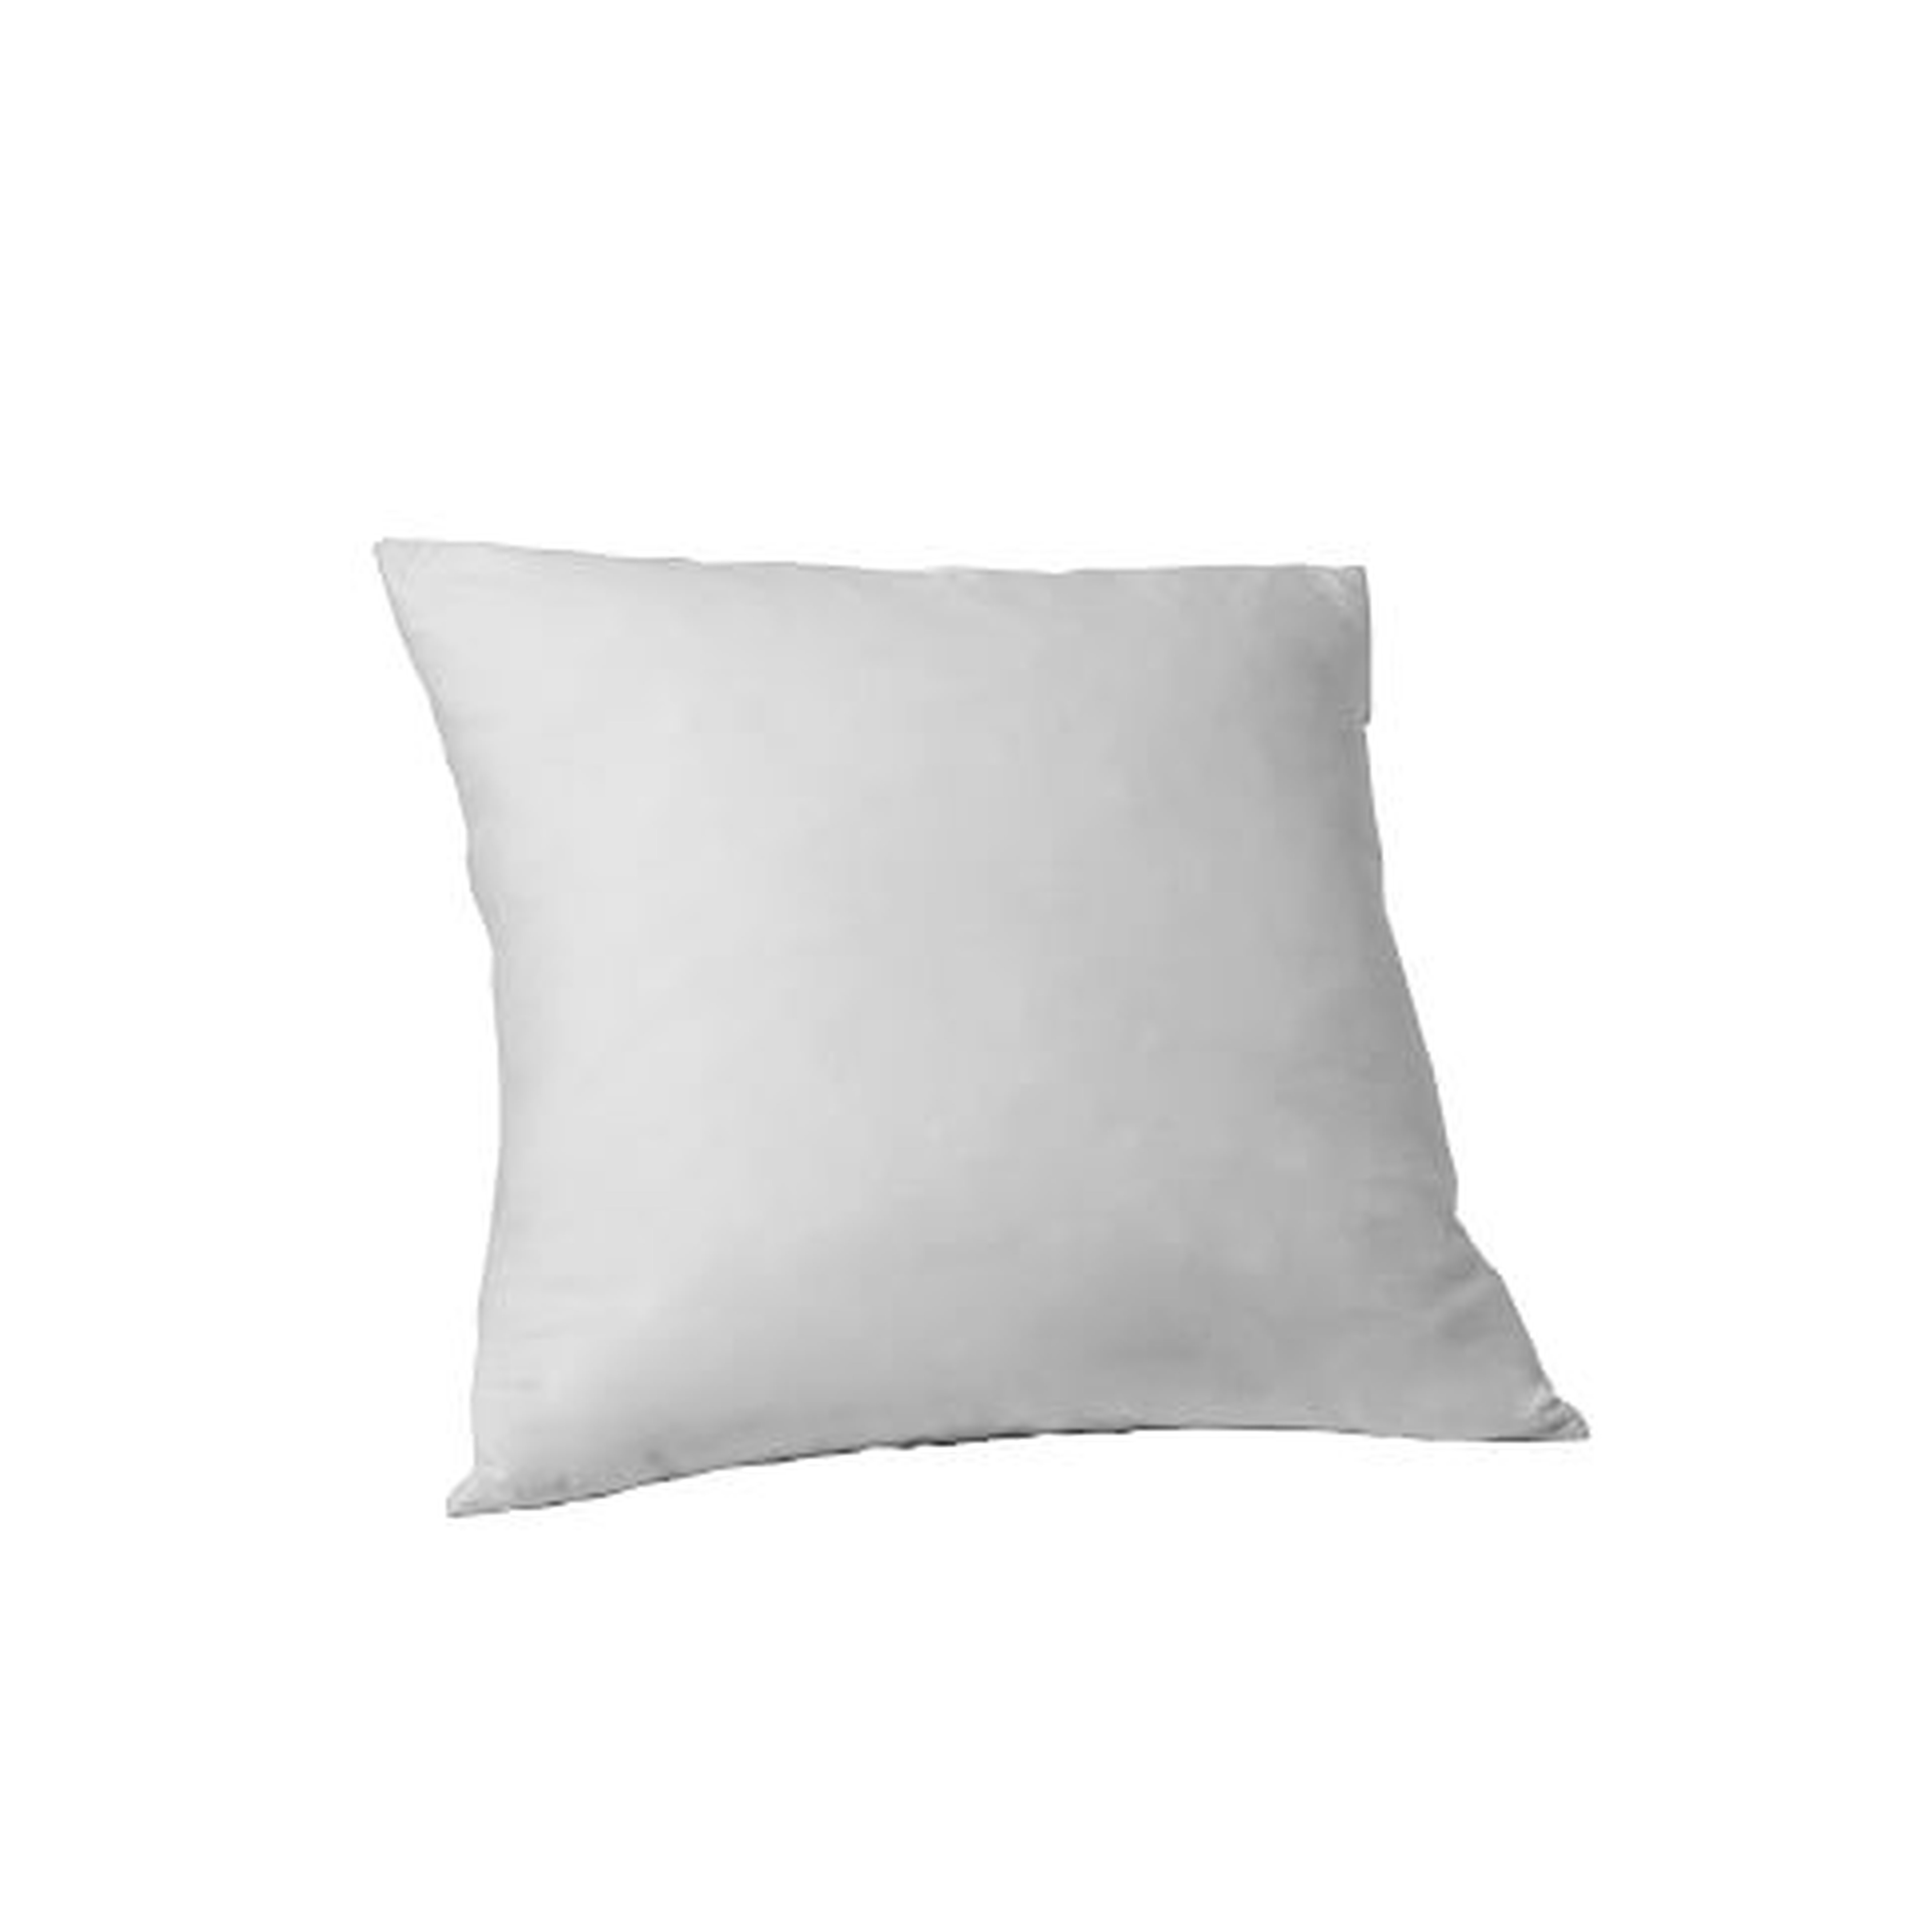 Decorative Pillow Insert - 18" sq., Feather - West Elm